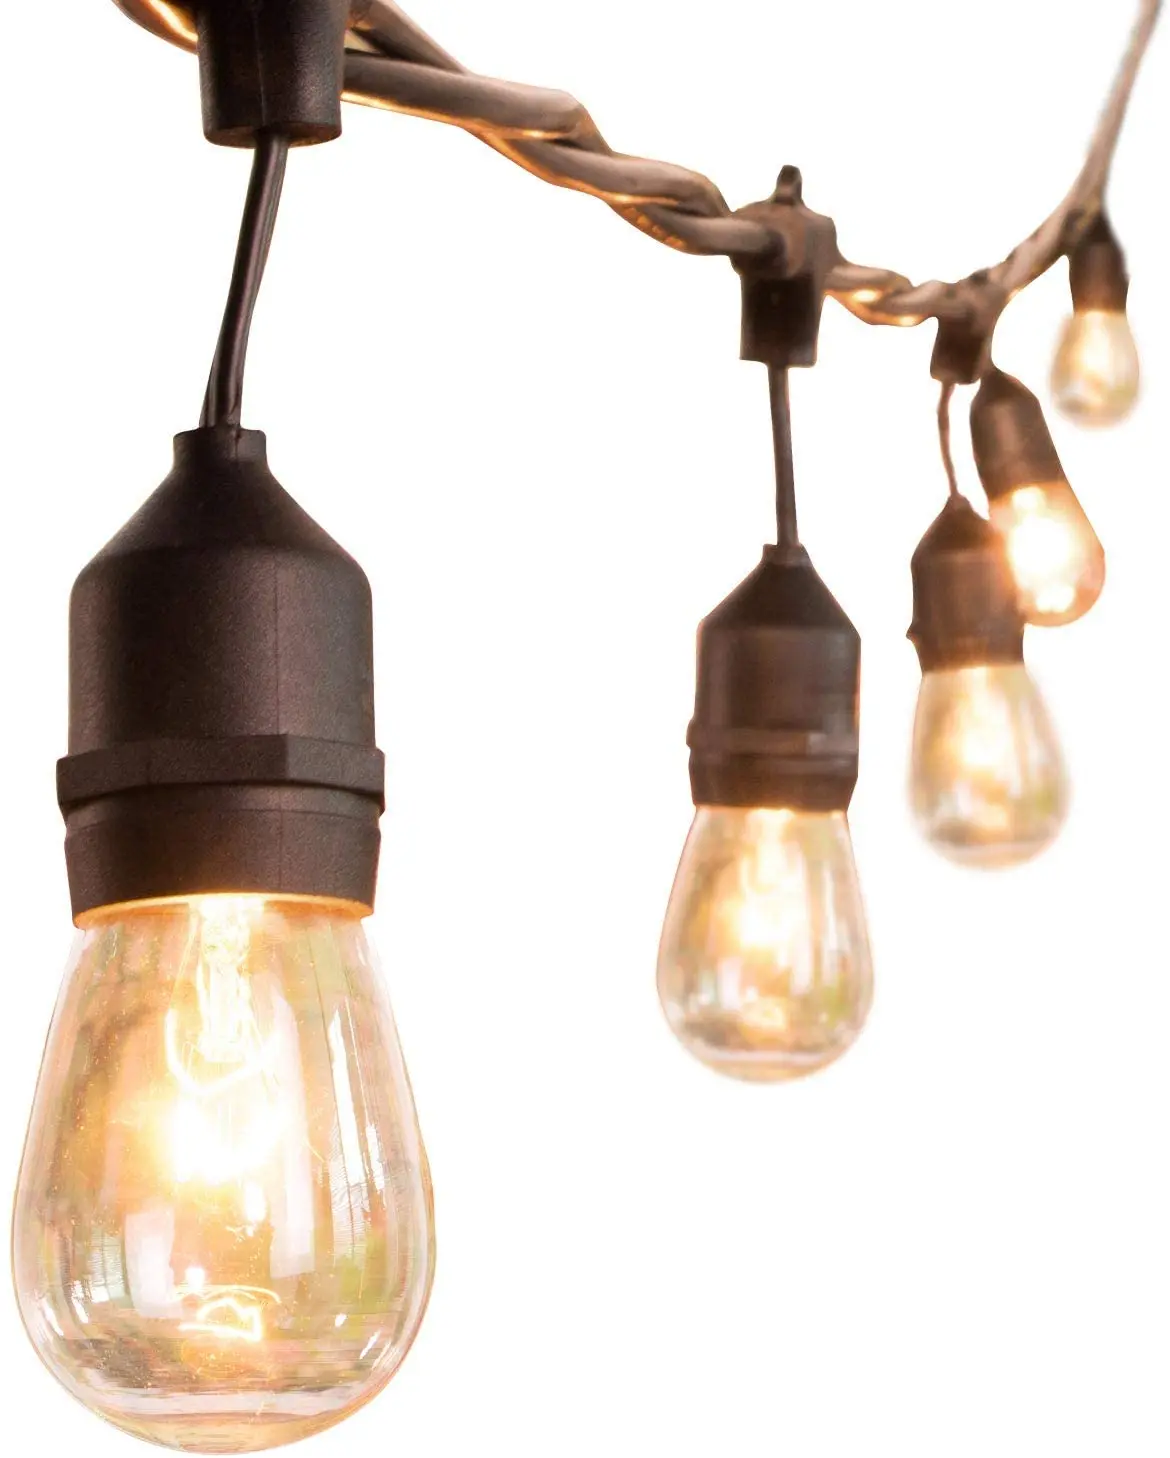 48 FT Outdoor String Light Commercial Grade Weatherproof Strand 16 Edison Vintage Bulbs 15 Hanging Sockets  Heavy-duty